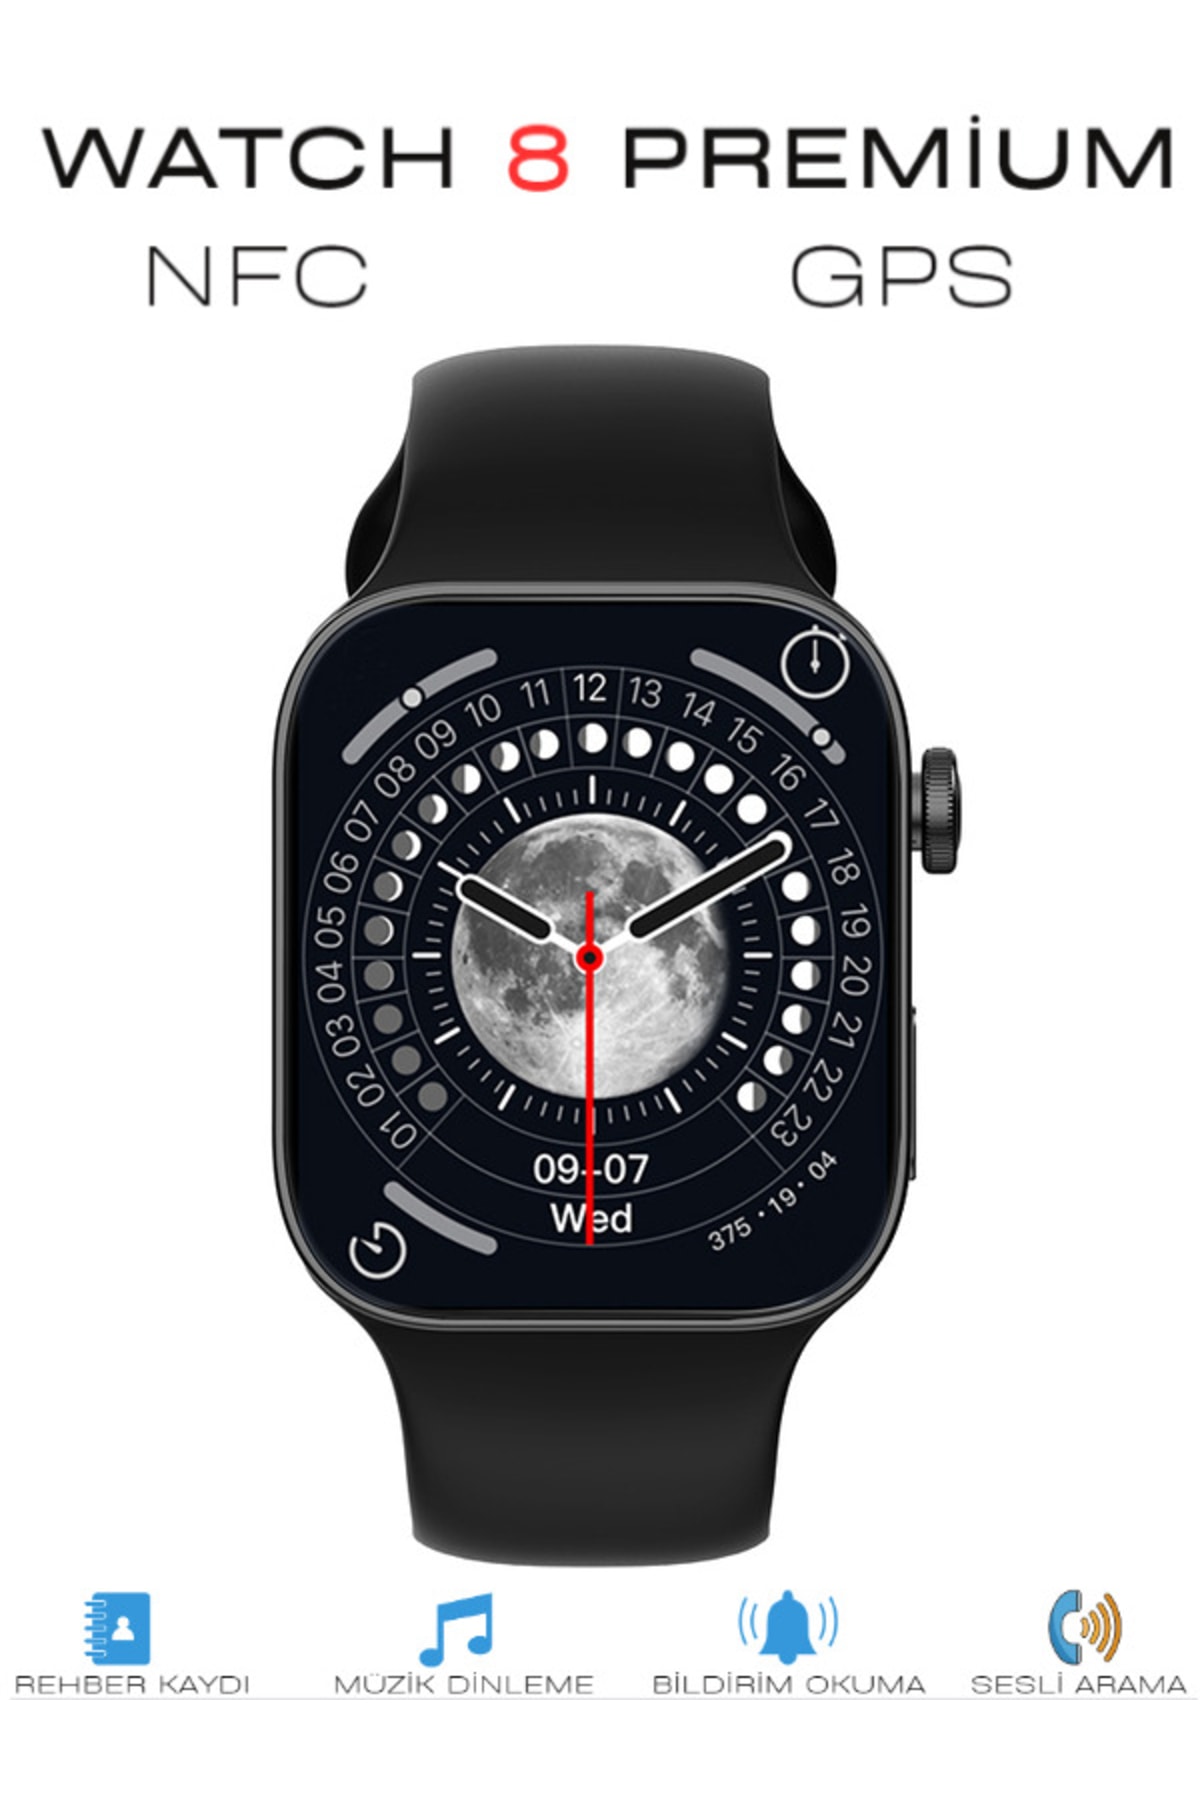 SONREİR Watch 8 Siyah 45mm Premium Akıllı Saat Gps 2.07 Inç Tam Ekran Iphone Xiaomi Uyumlu Spor Kol Saati